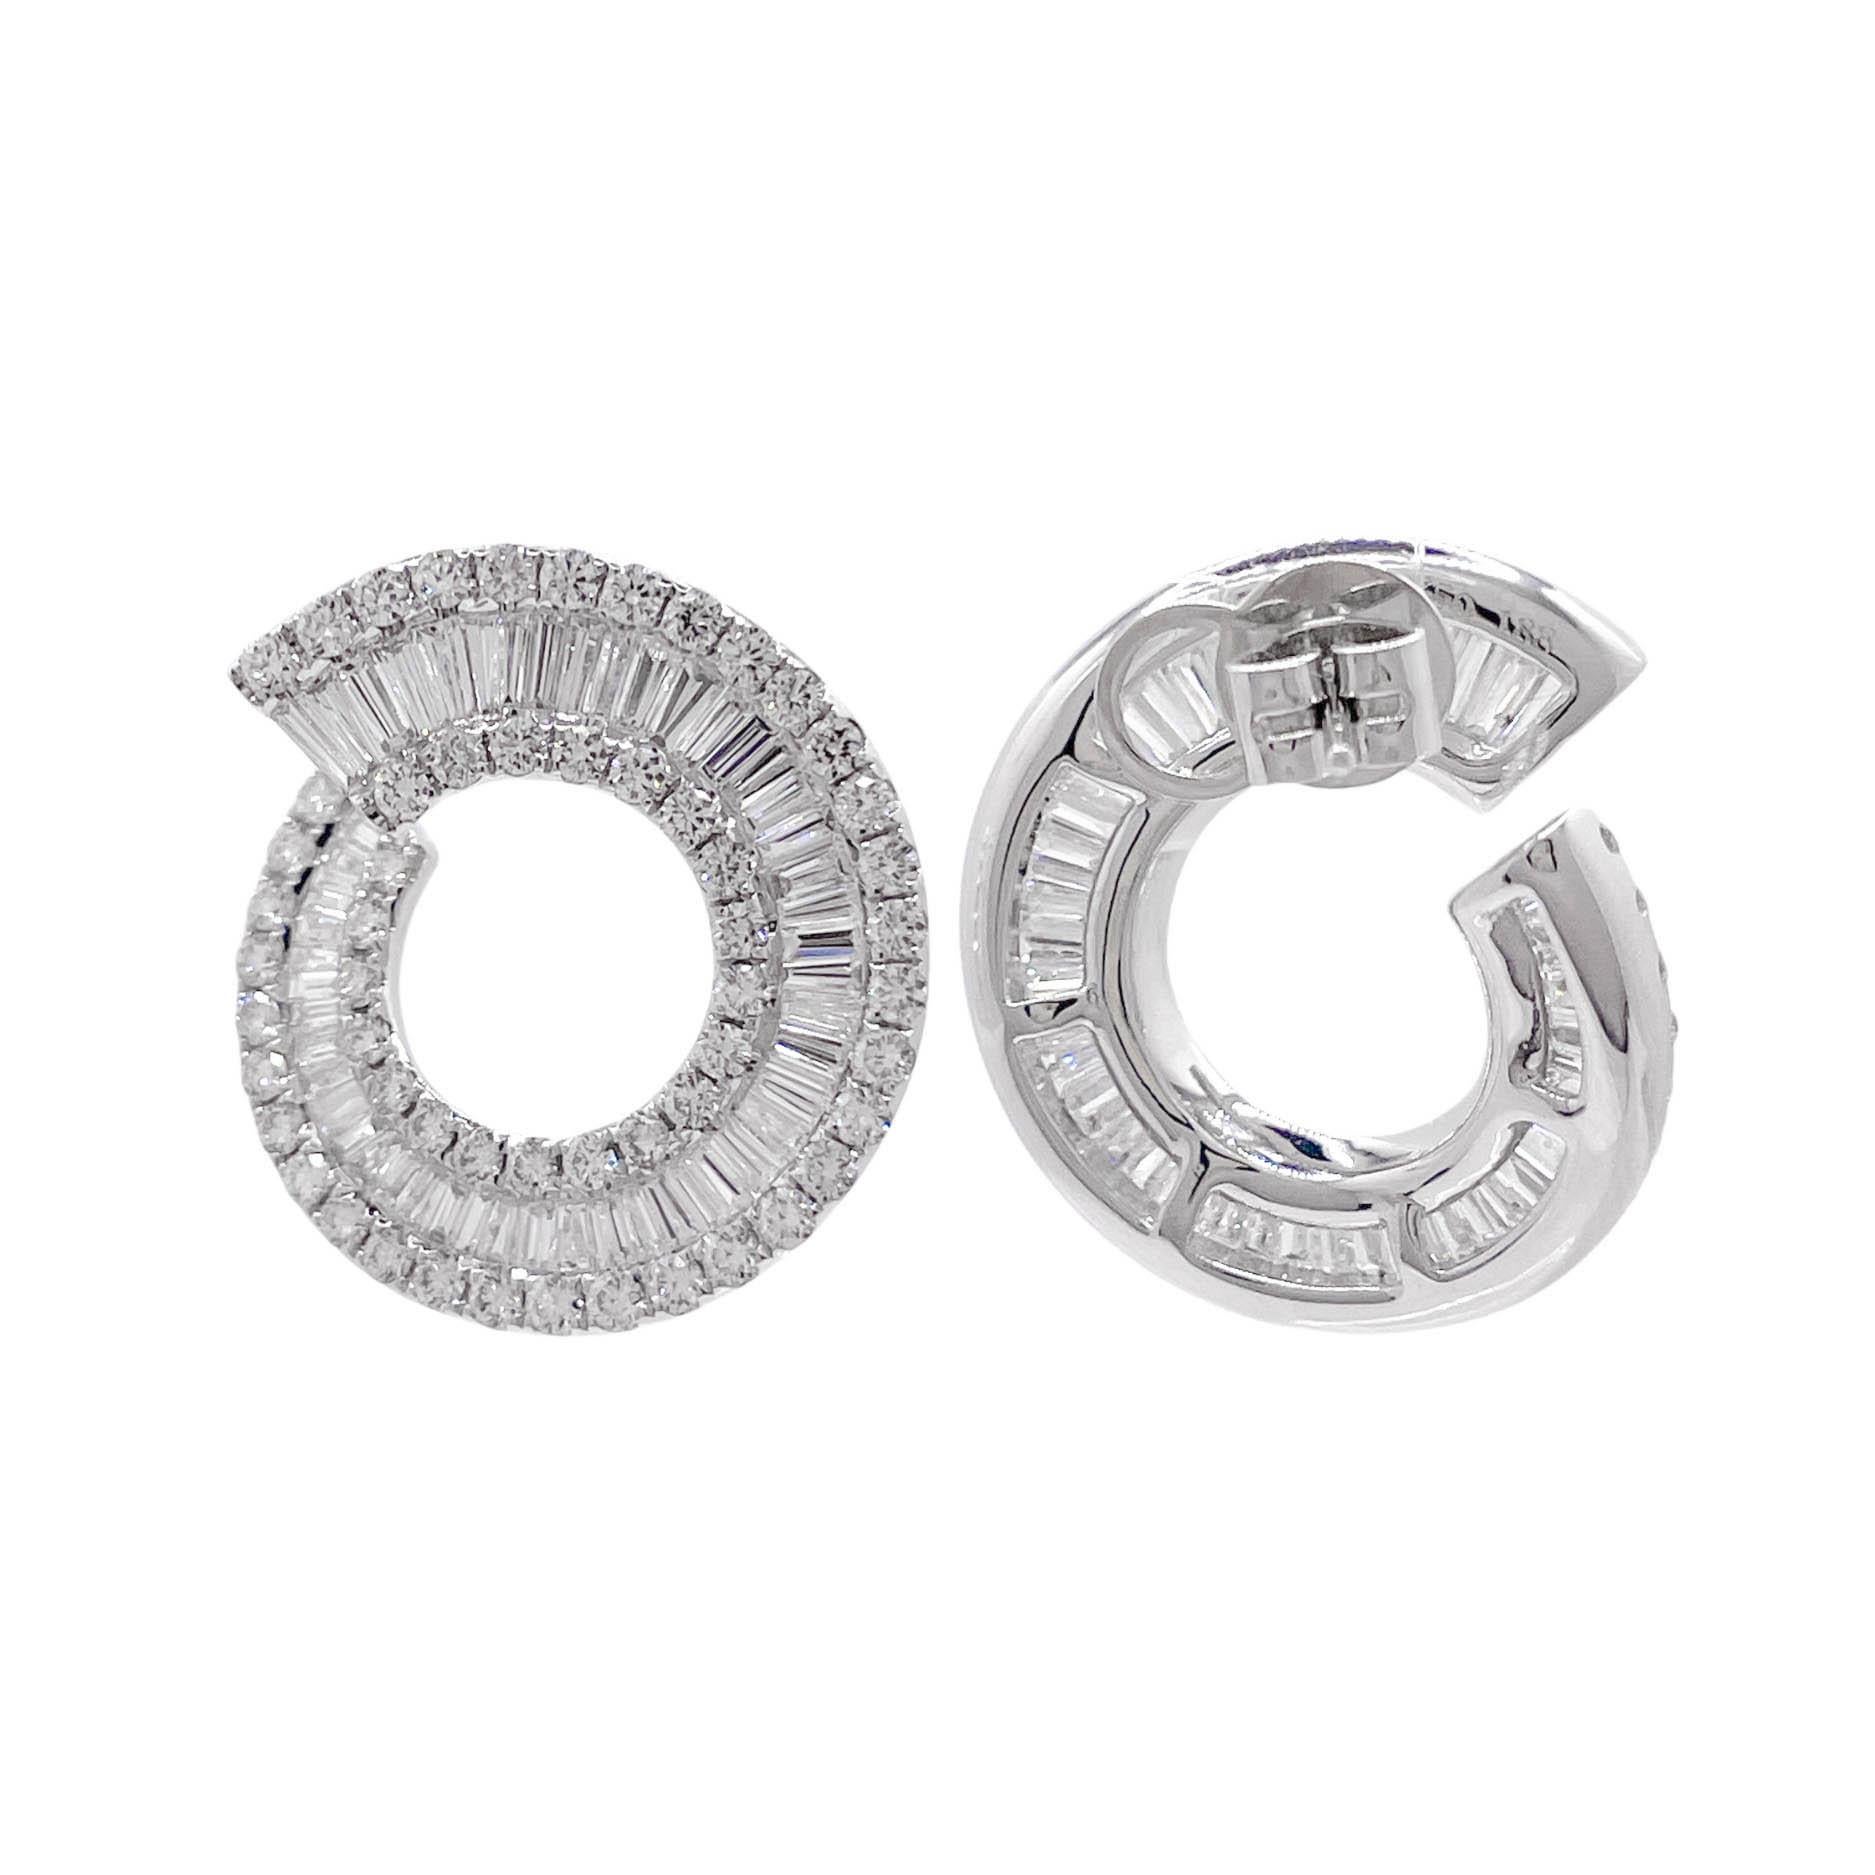 Jay Feder 18k White Gold Diamond C Shaped Earrings In Good Condition For Sale In Boca Raton, FL